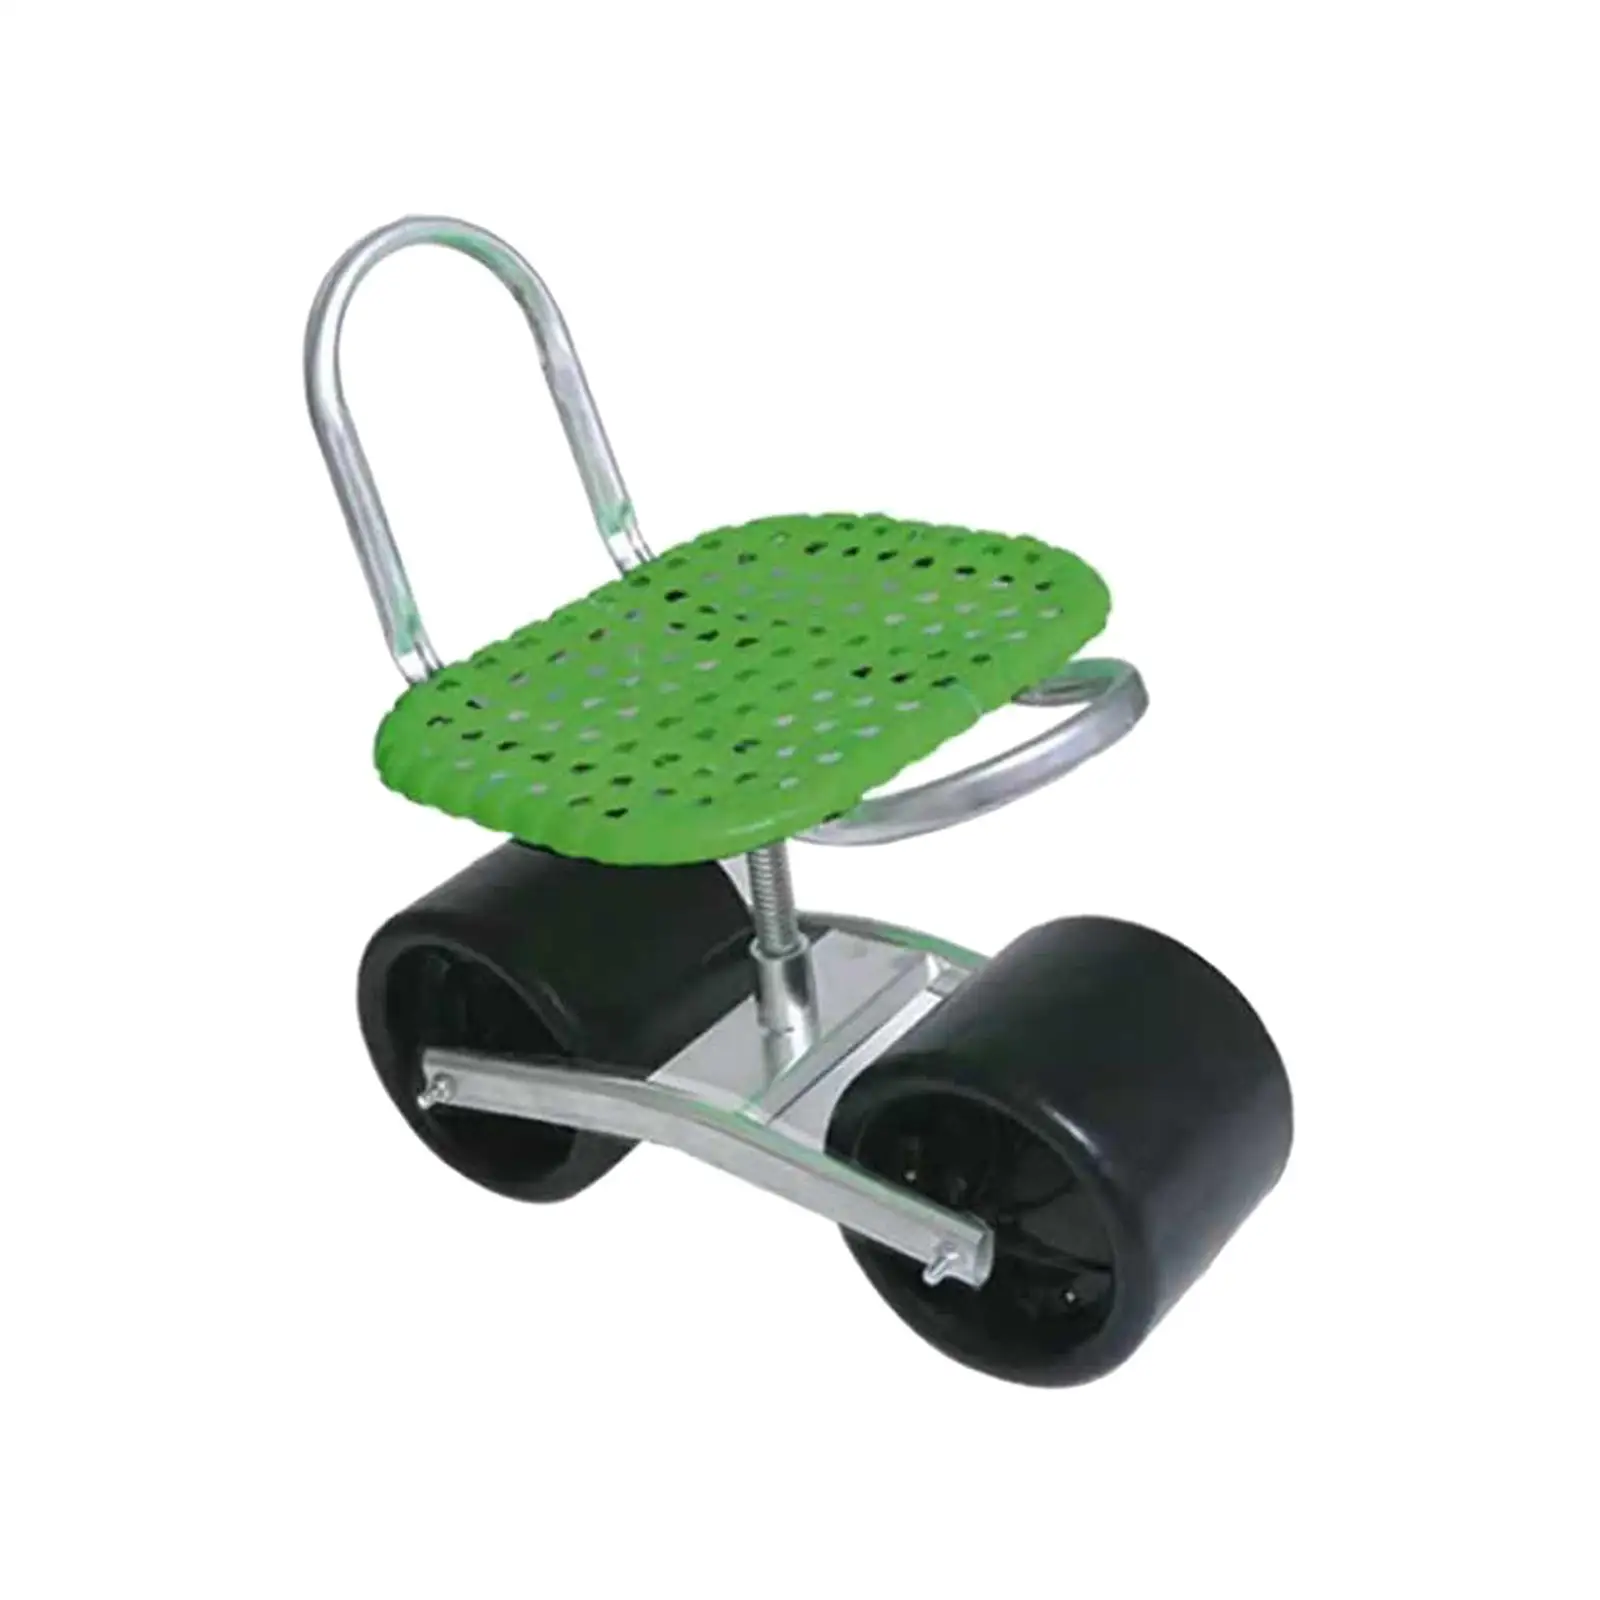 Garden Trolley Rolling Seat Lawn Wagon Cart, 360 Degree Swivel Seat Mobile